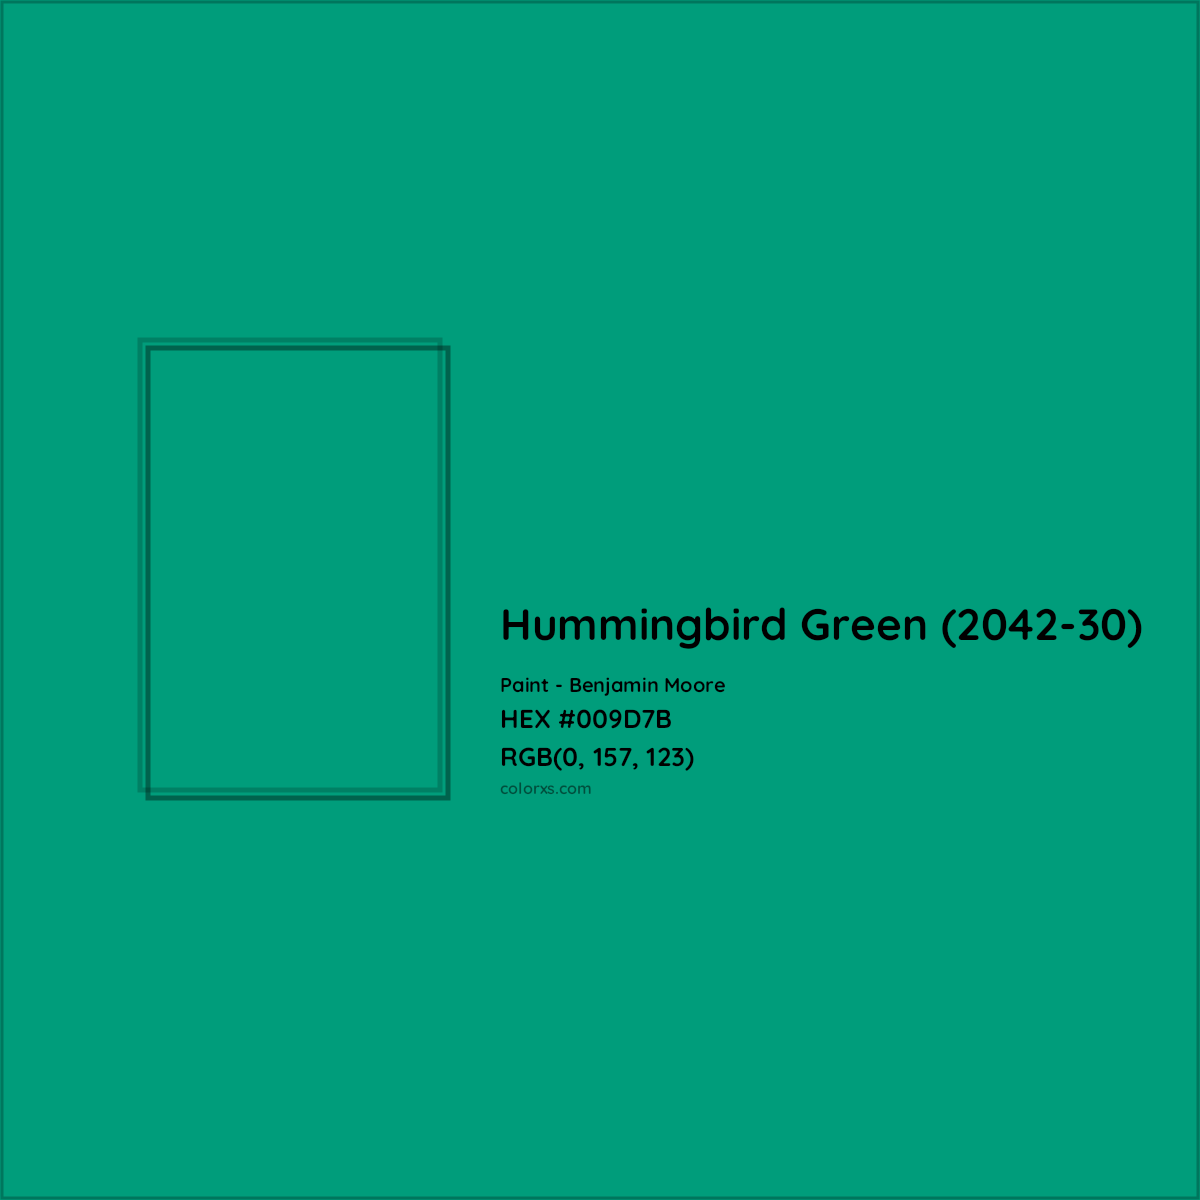 HEX #009D7B Hummingbird Green (2042-30) Paint Benjamin Moore - Color Code